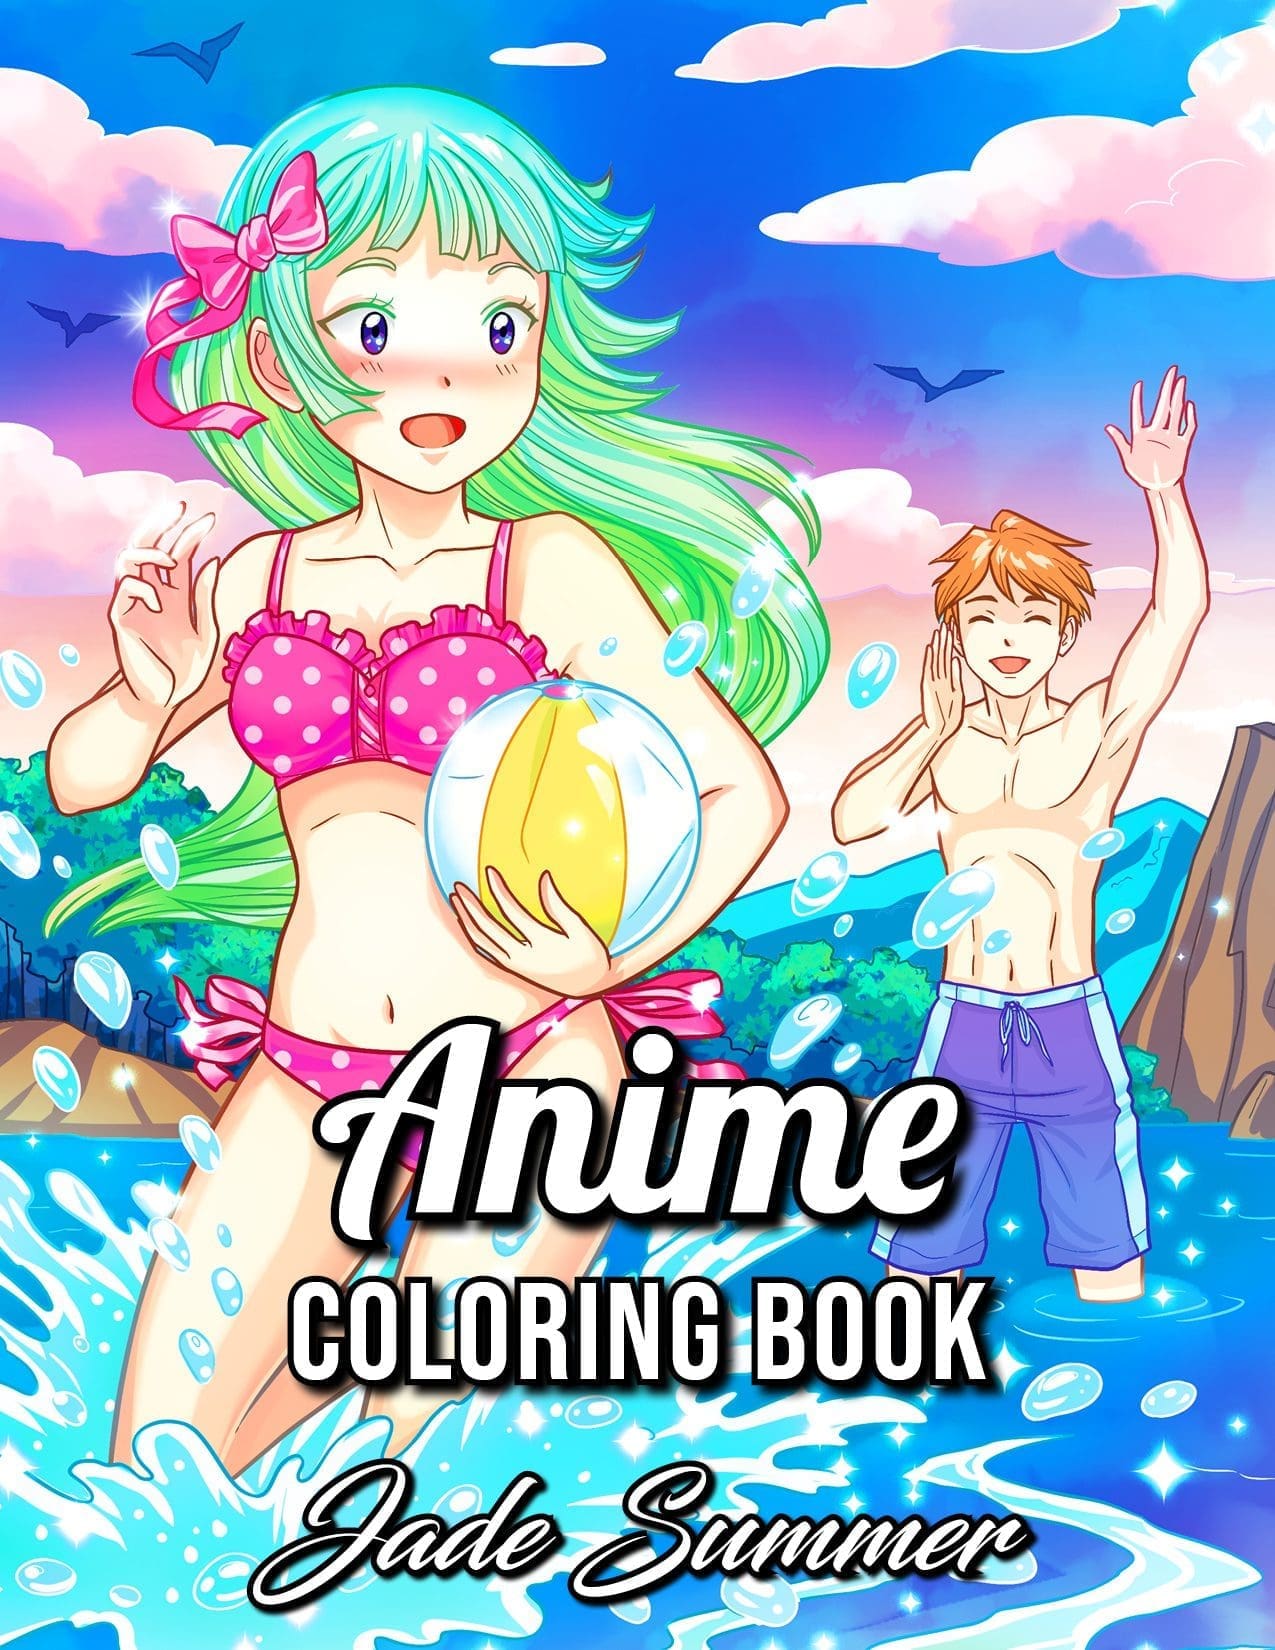 Official Trailer | BLEACH: The Official Anime Coloring Book | VIZ - YouTube